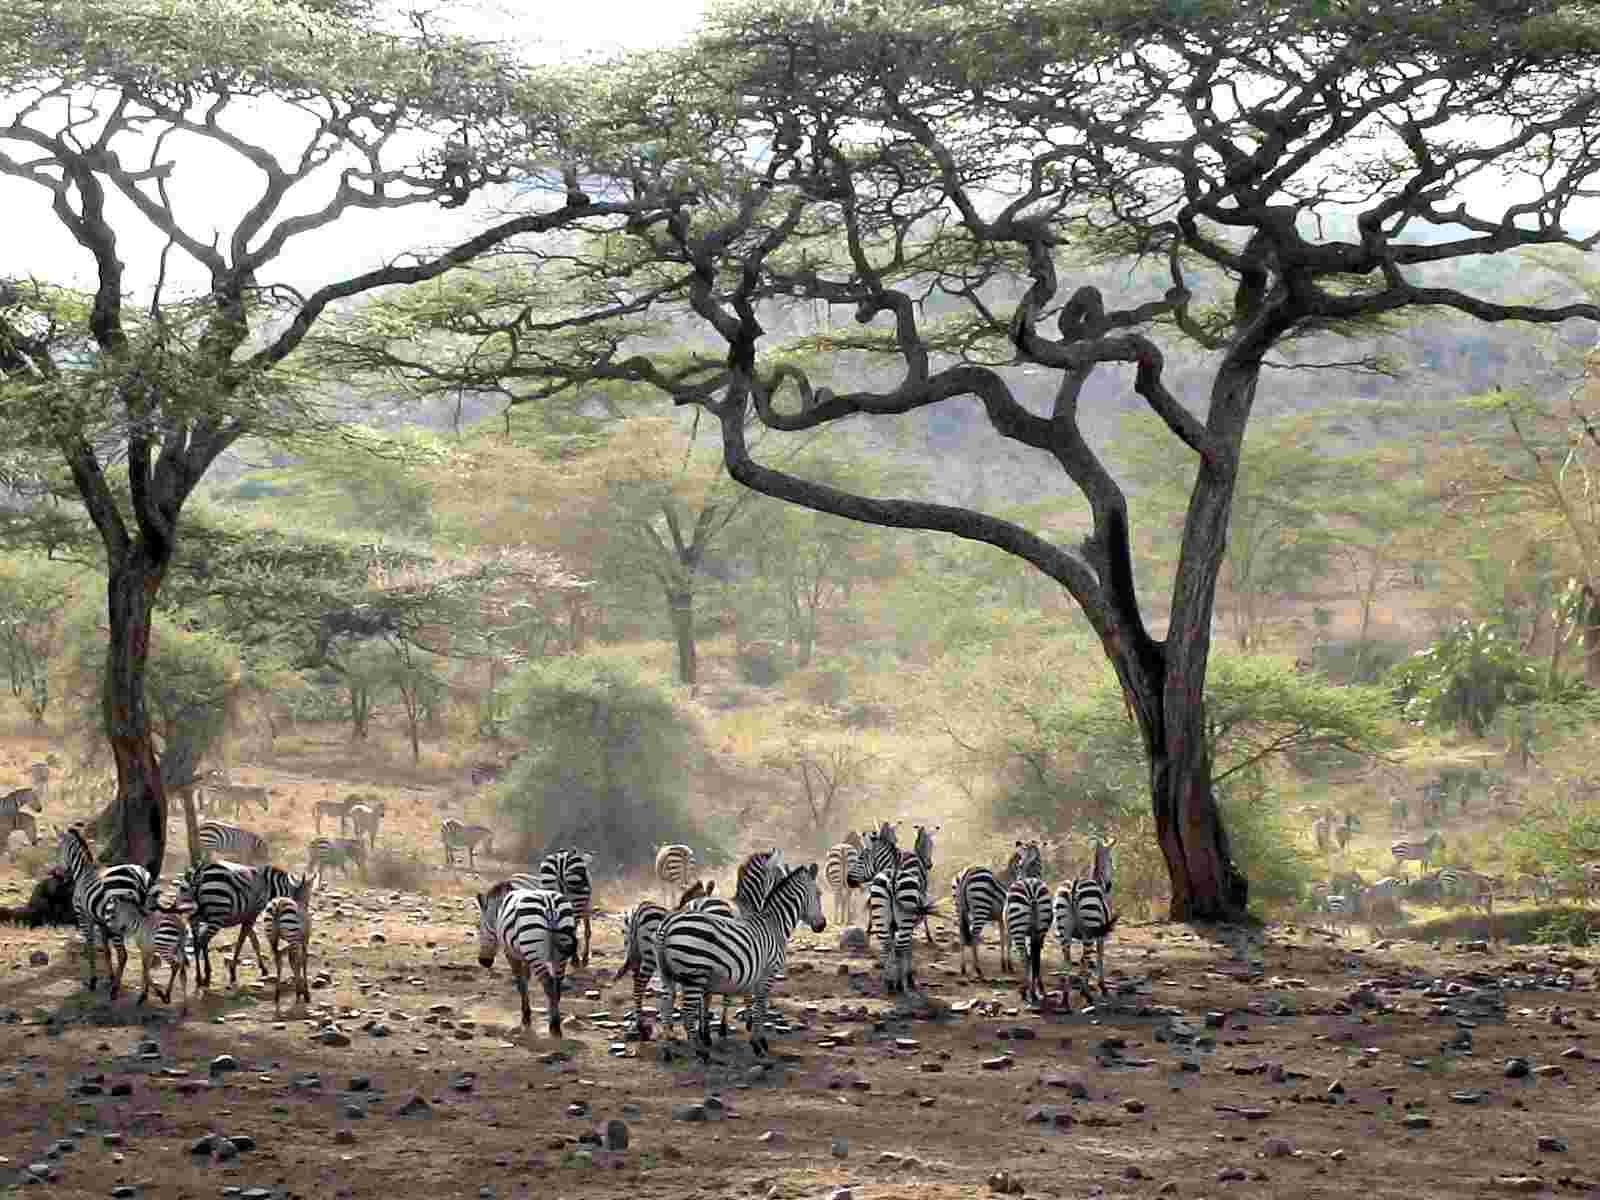 Zebras and acacia trees